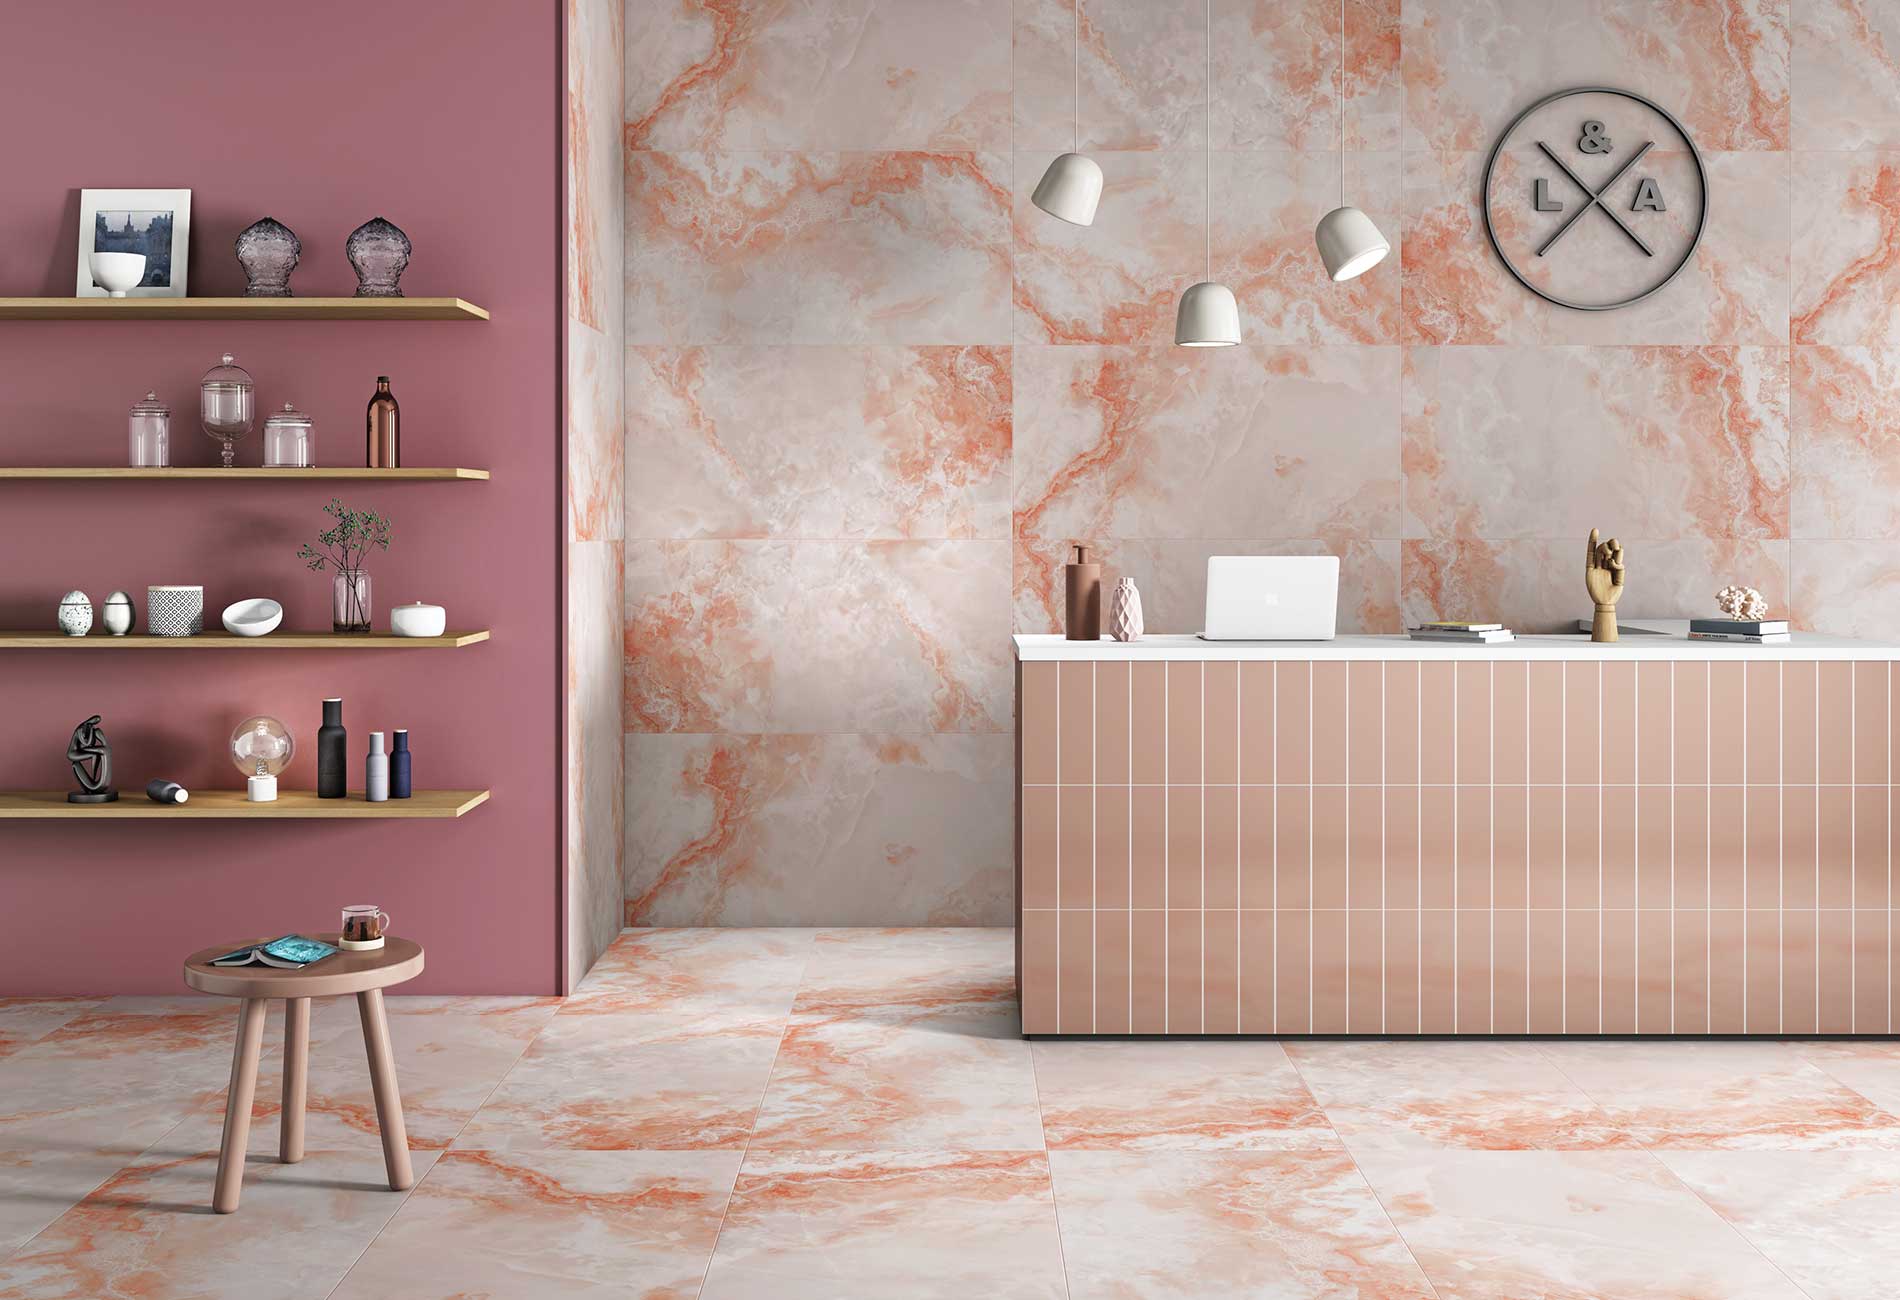 Job Lot: 42 Tiles (30 sq.m) Onyx Oasis Pink 60x120cm Polished Porcelain Wall & Floor Tile